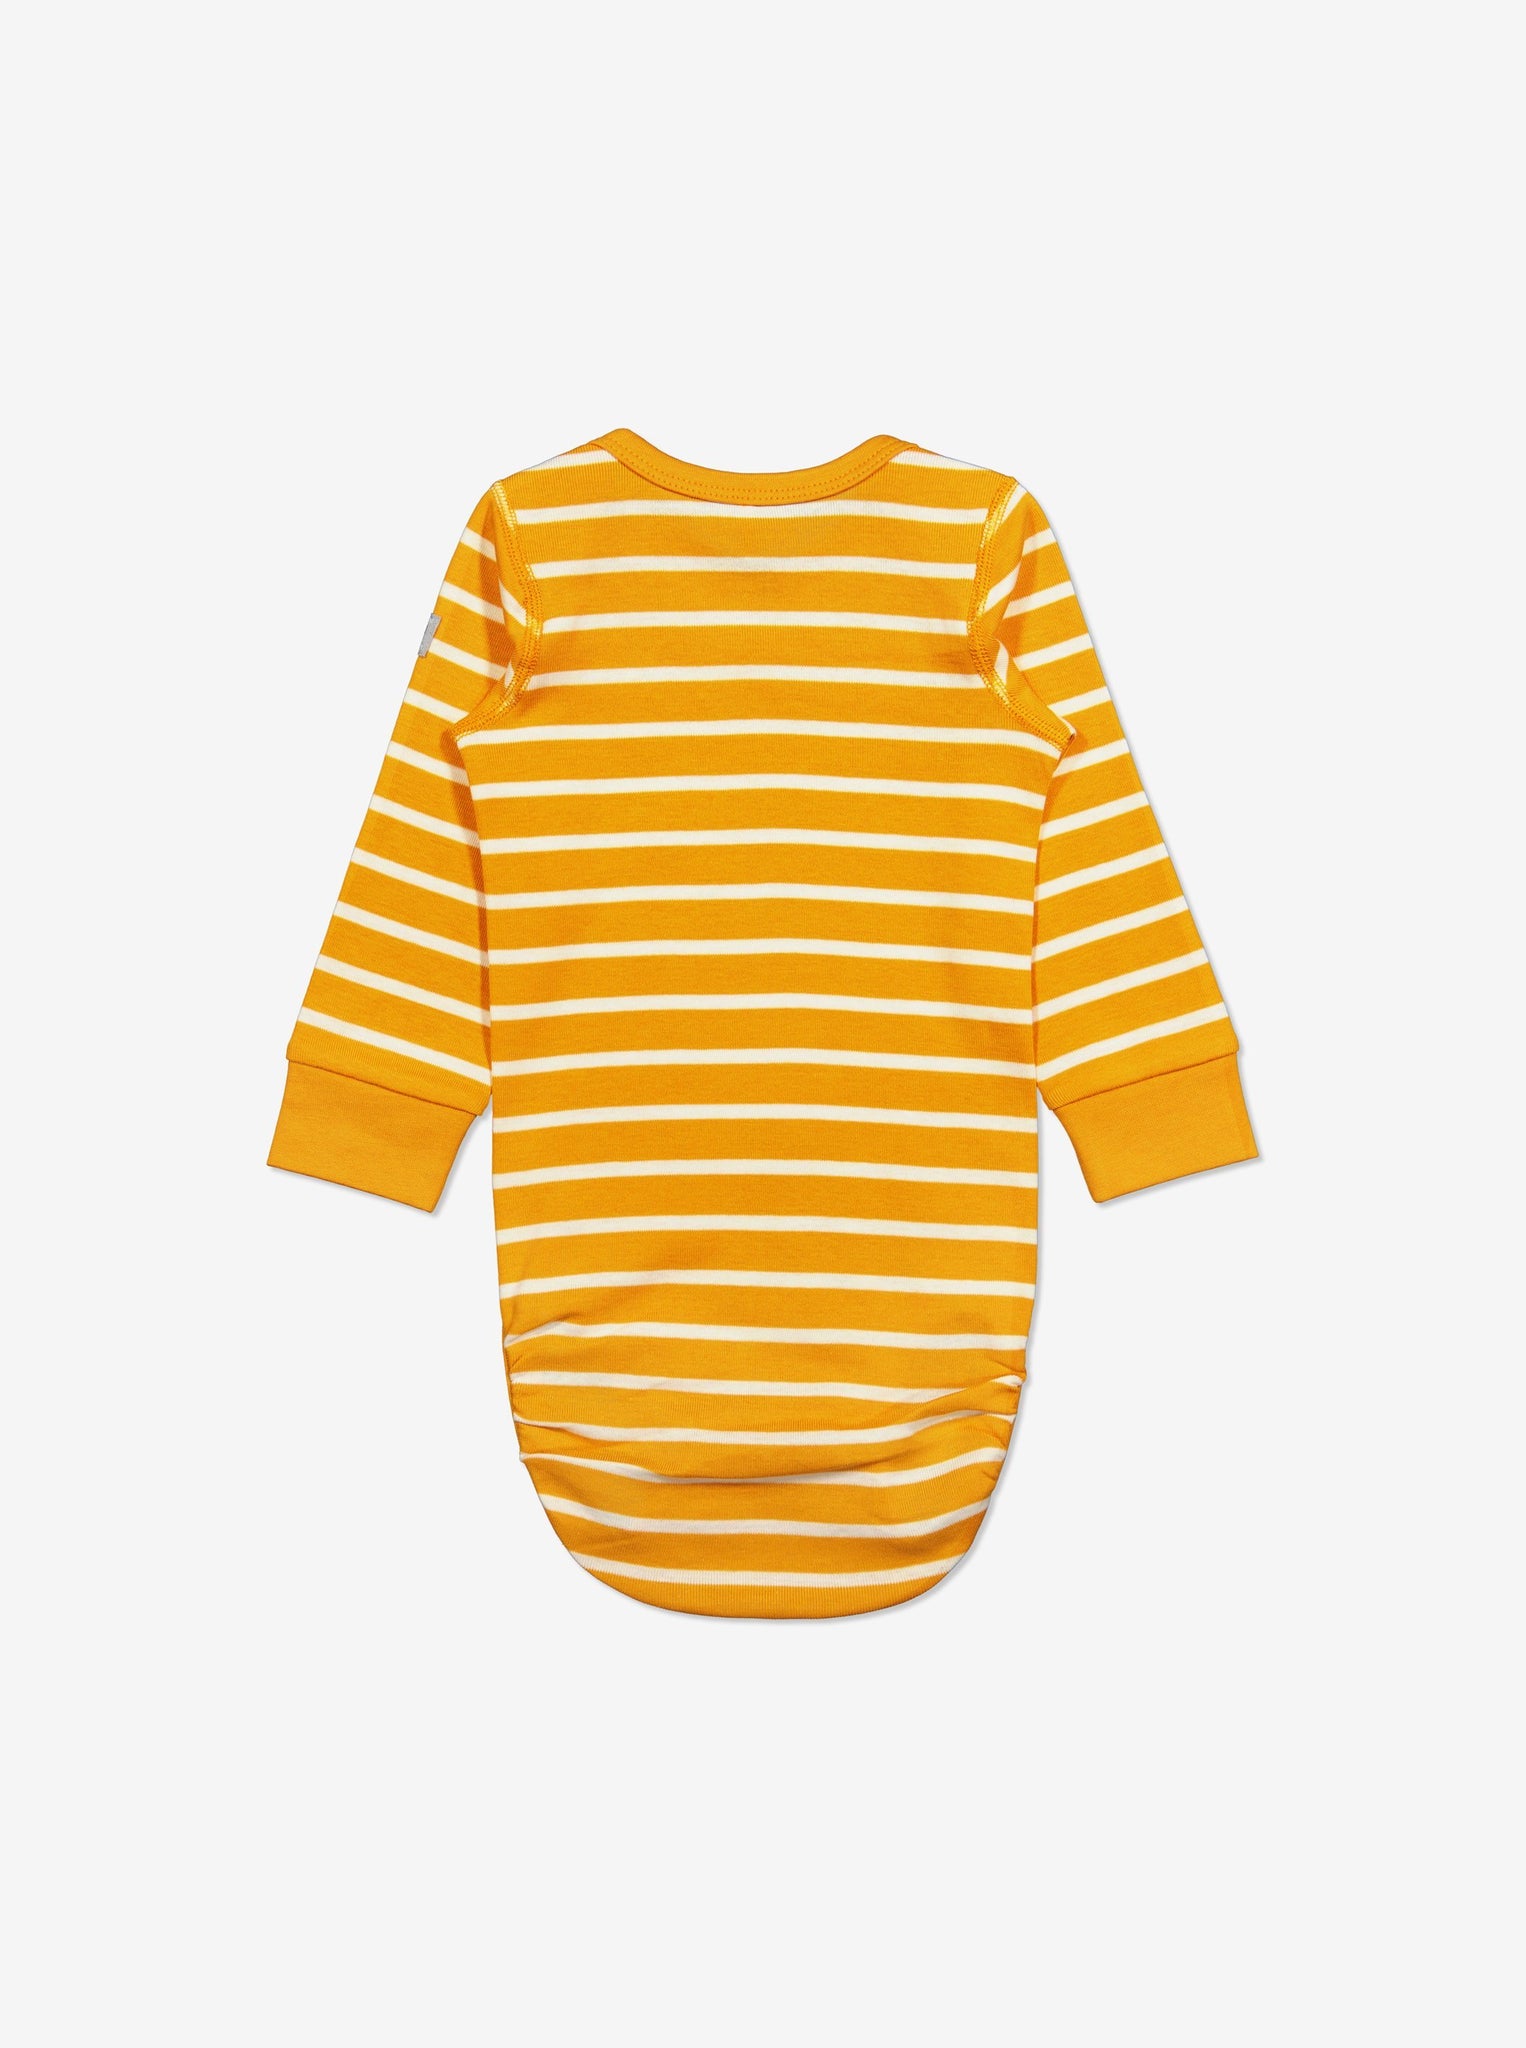  Organic Striped Yellow Babygrow from Polarn O. Pyret Kidswear. Made with 100% organic cotton.